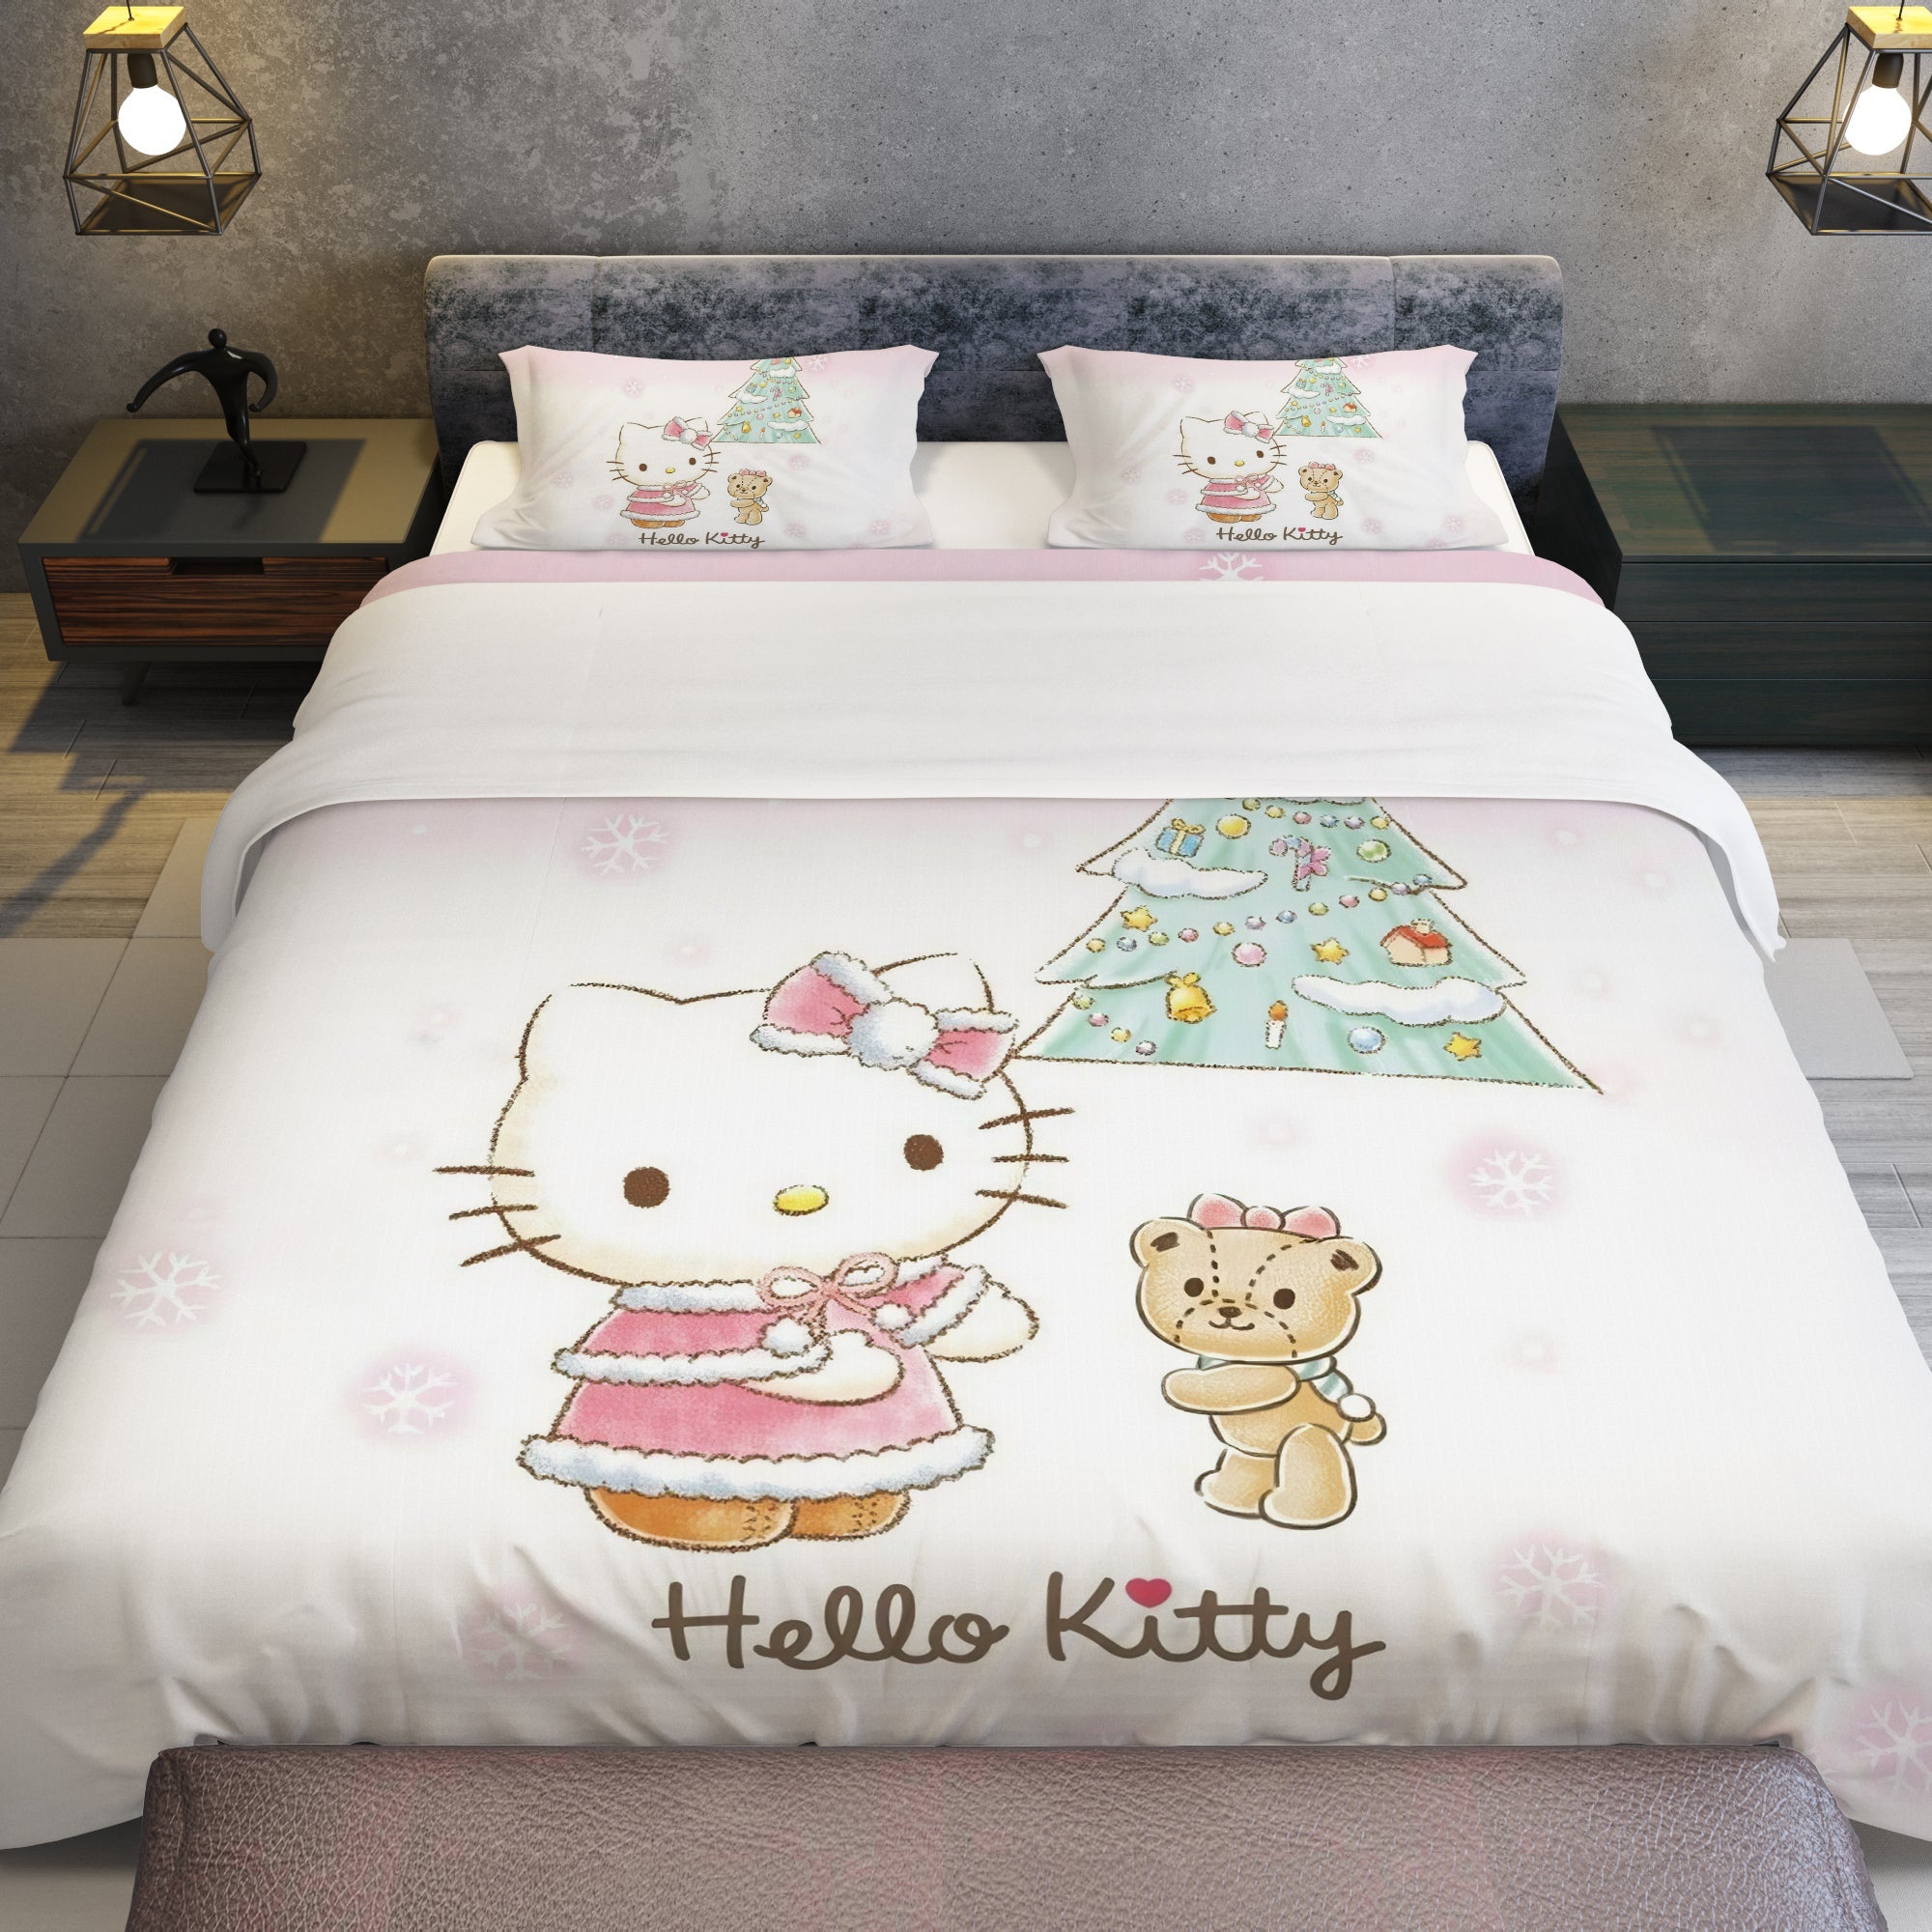 25 Adorable Hello Kitty Bedroom Decoration Ideas for Girls  Hello kitty  bedroom furniture, Hello kitty furniture, Hello kitty bedroom decor